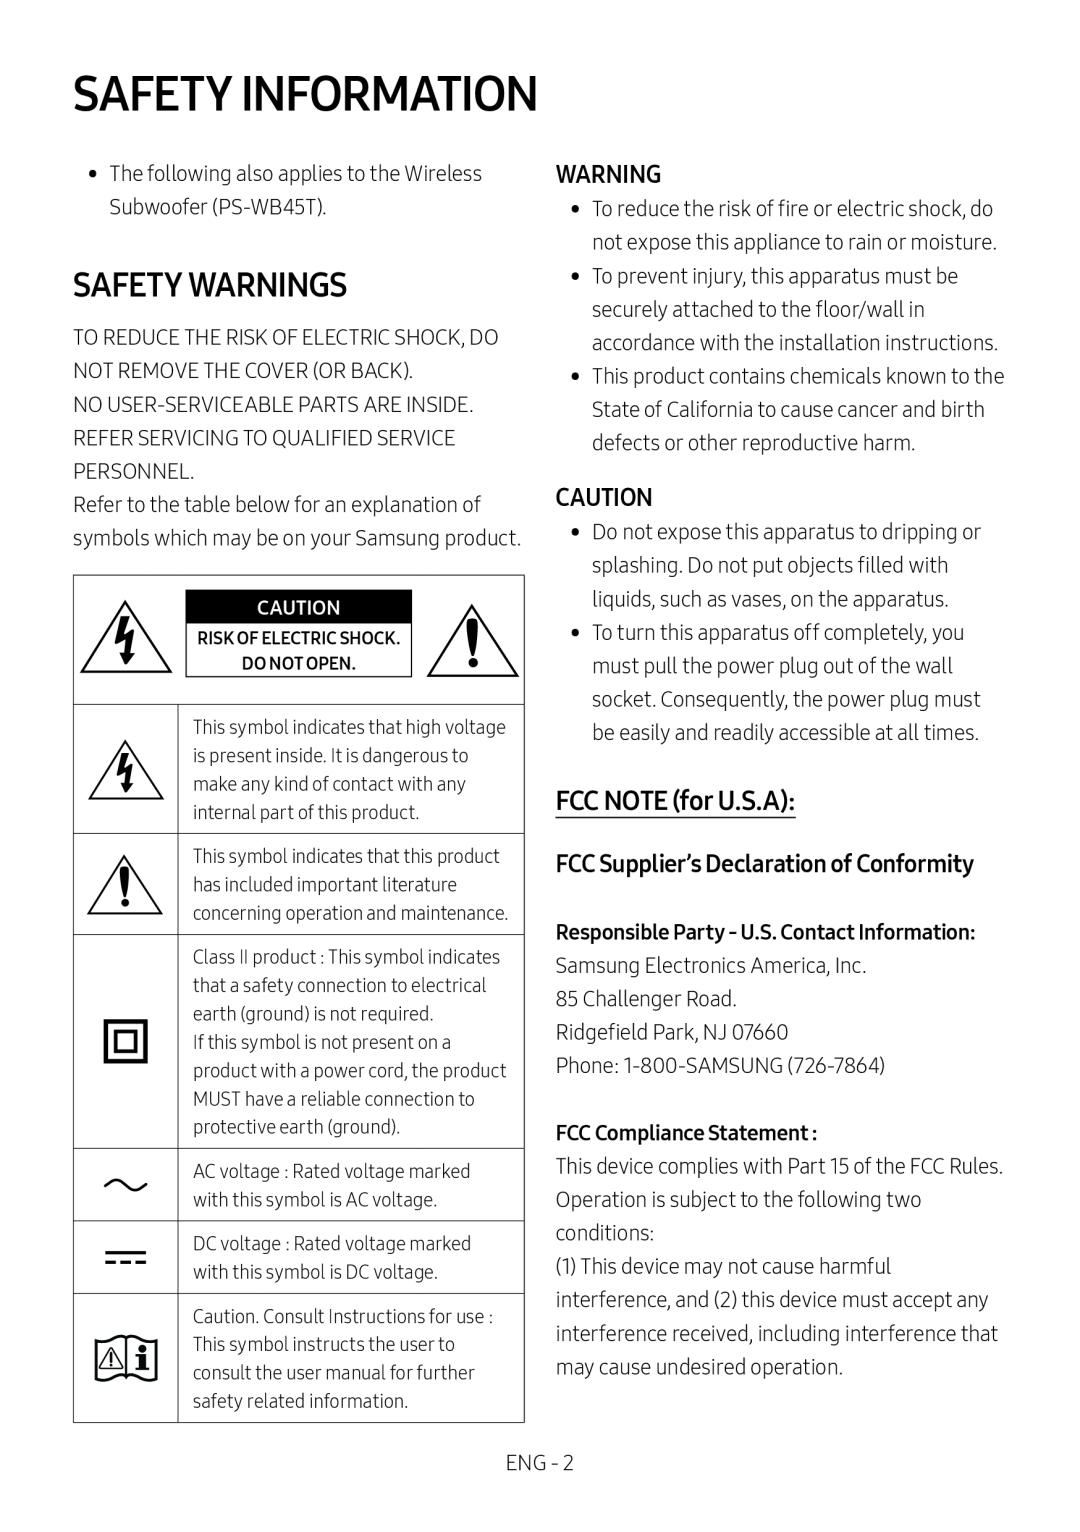 SAFETY WARNINGS Standard HW-B450